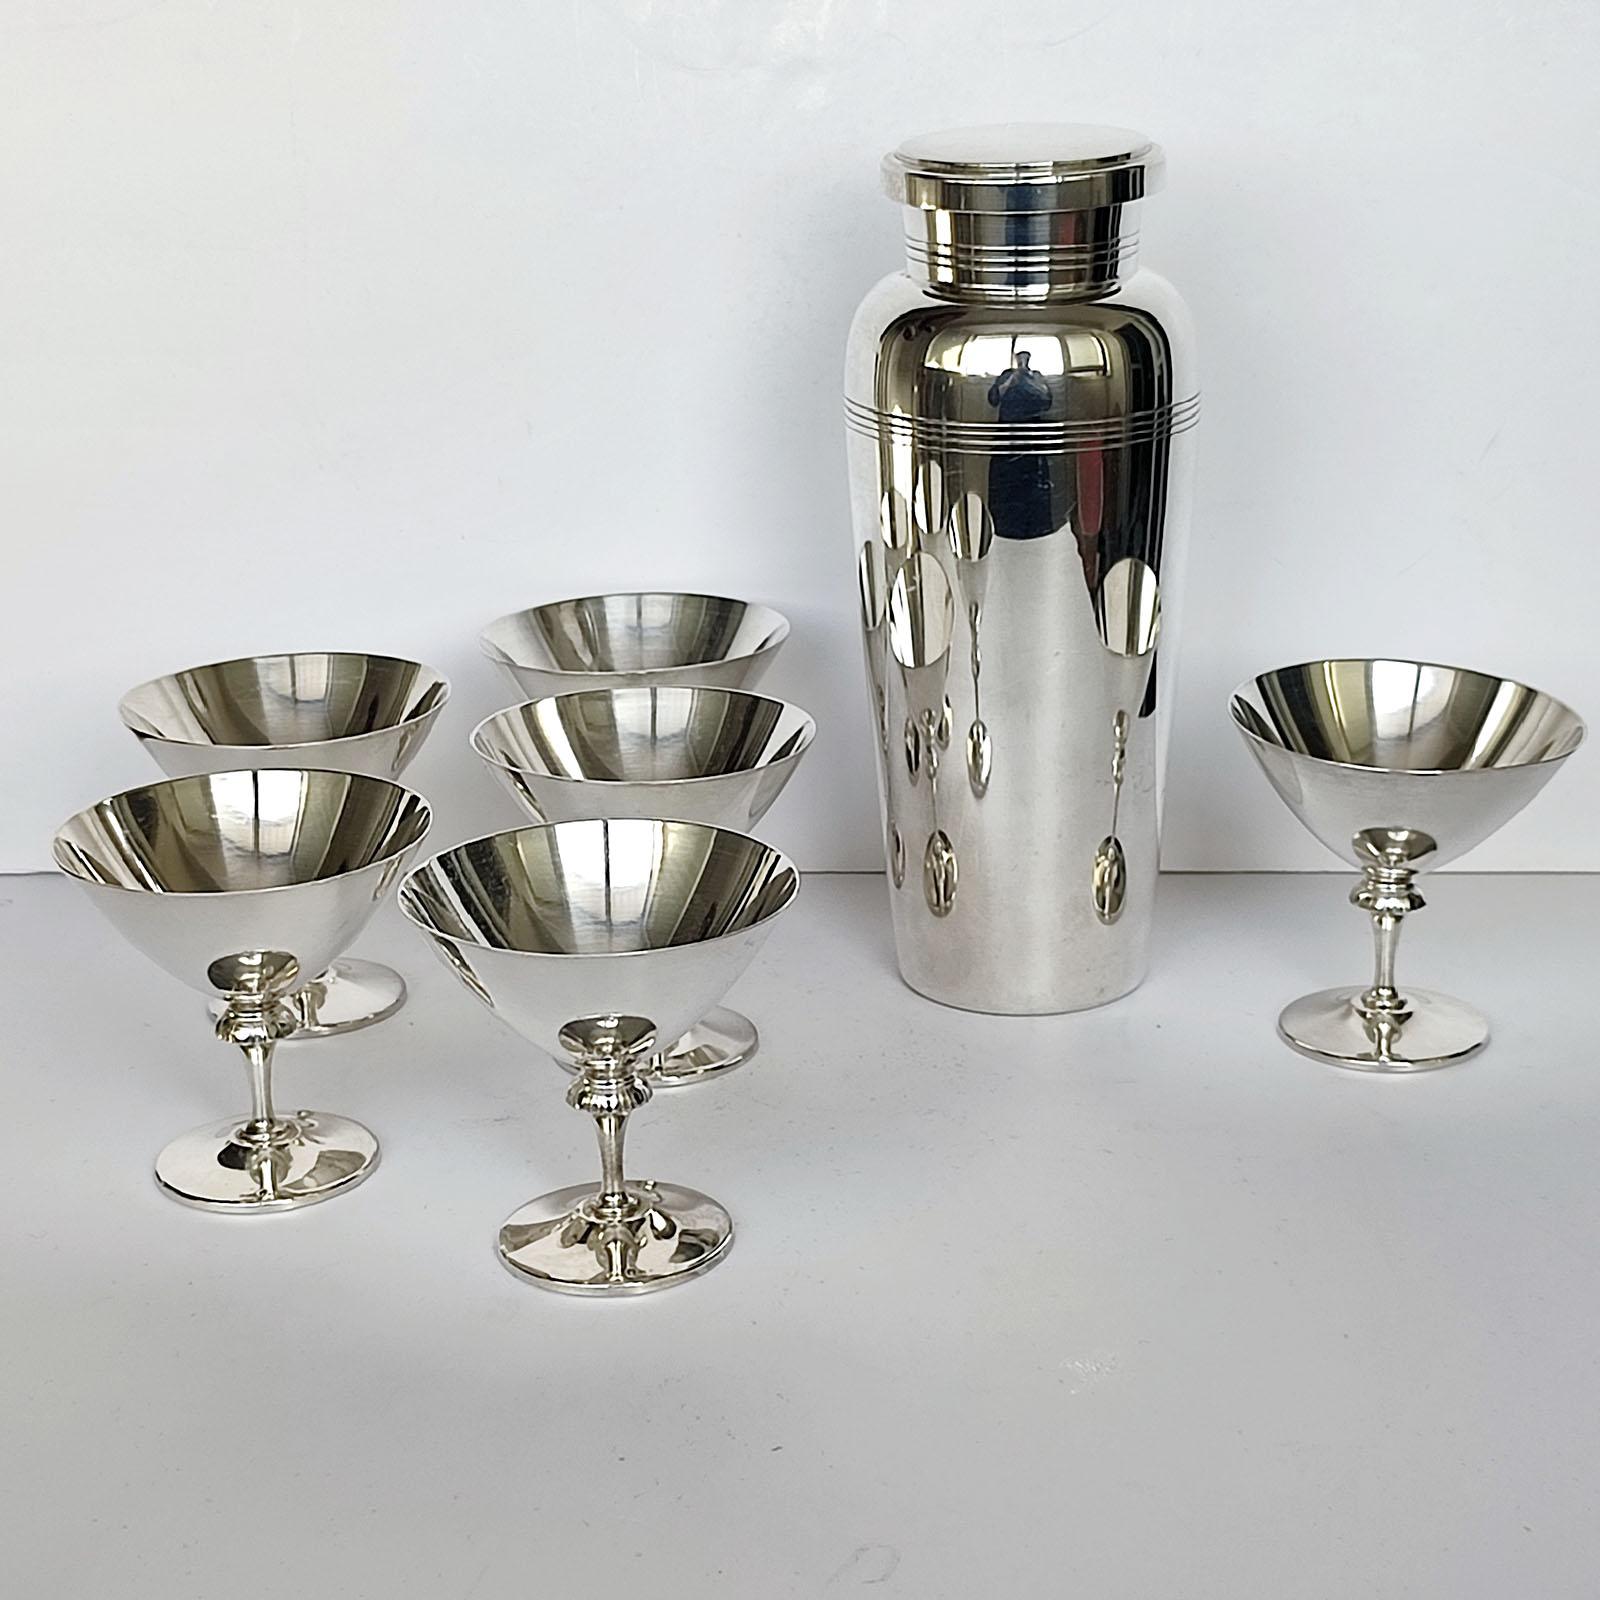 Silvered Art Deco Cocktail Shaker CG Hallberg and Six Glasses, Folke Arström, GAB, Sweden